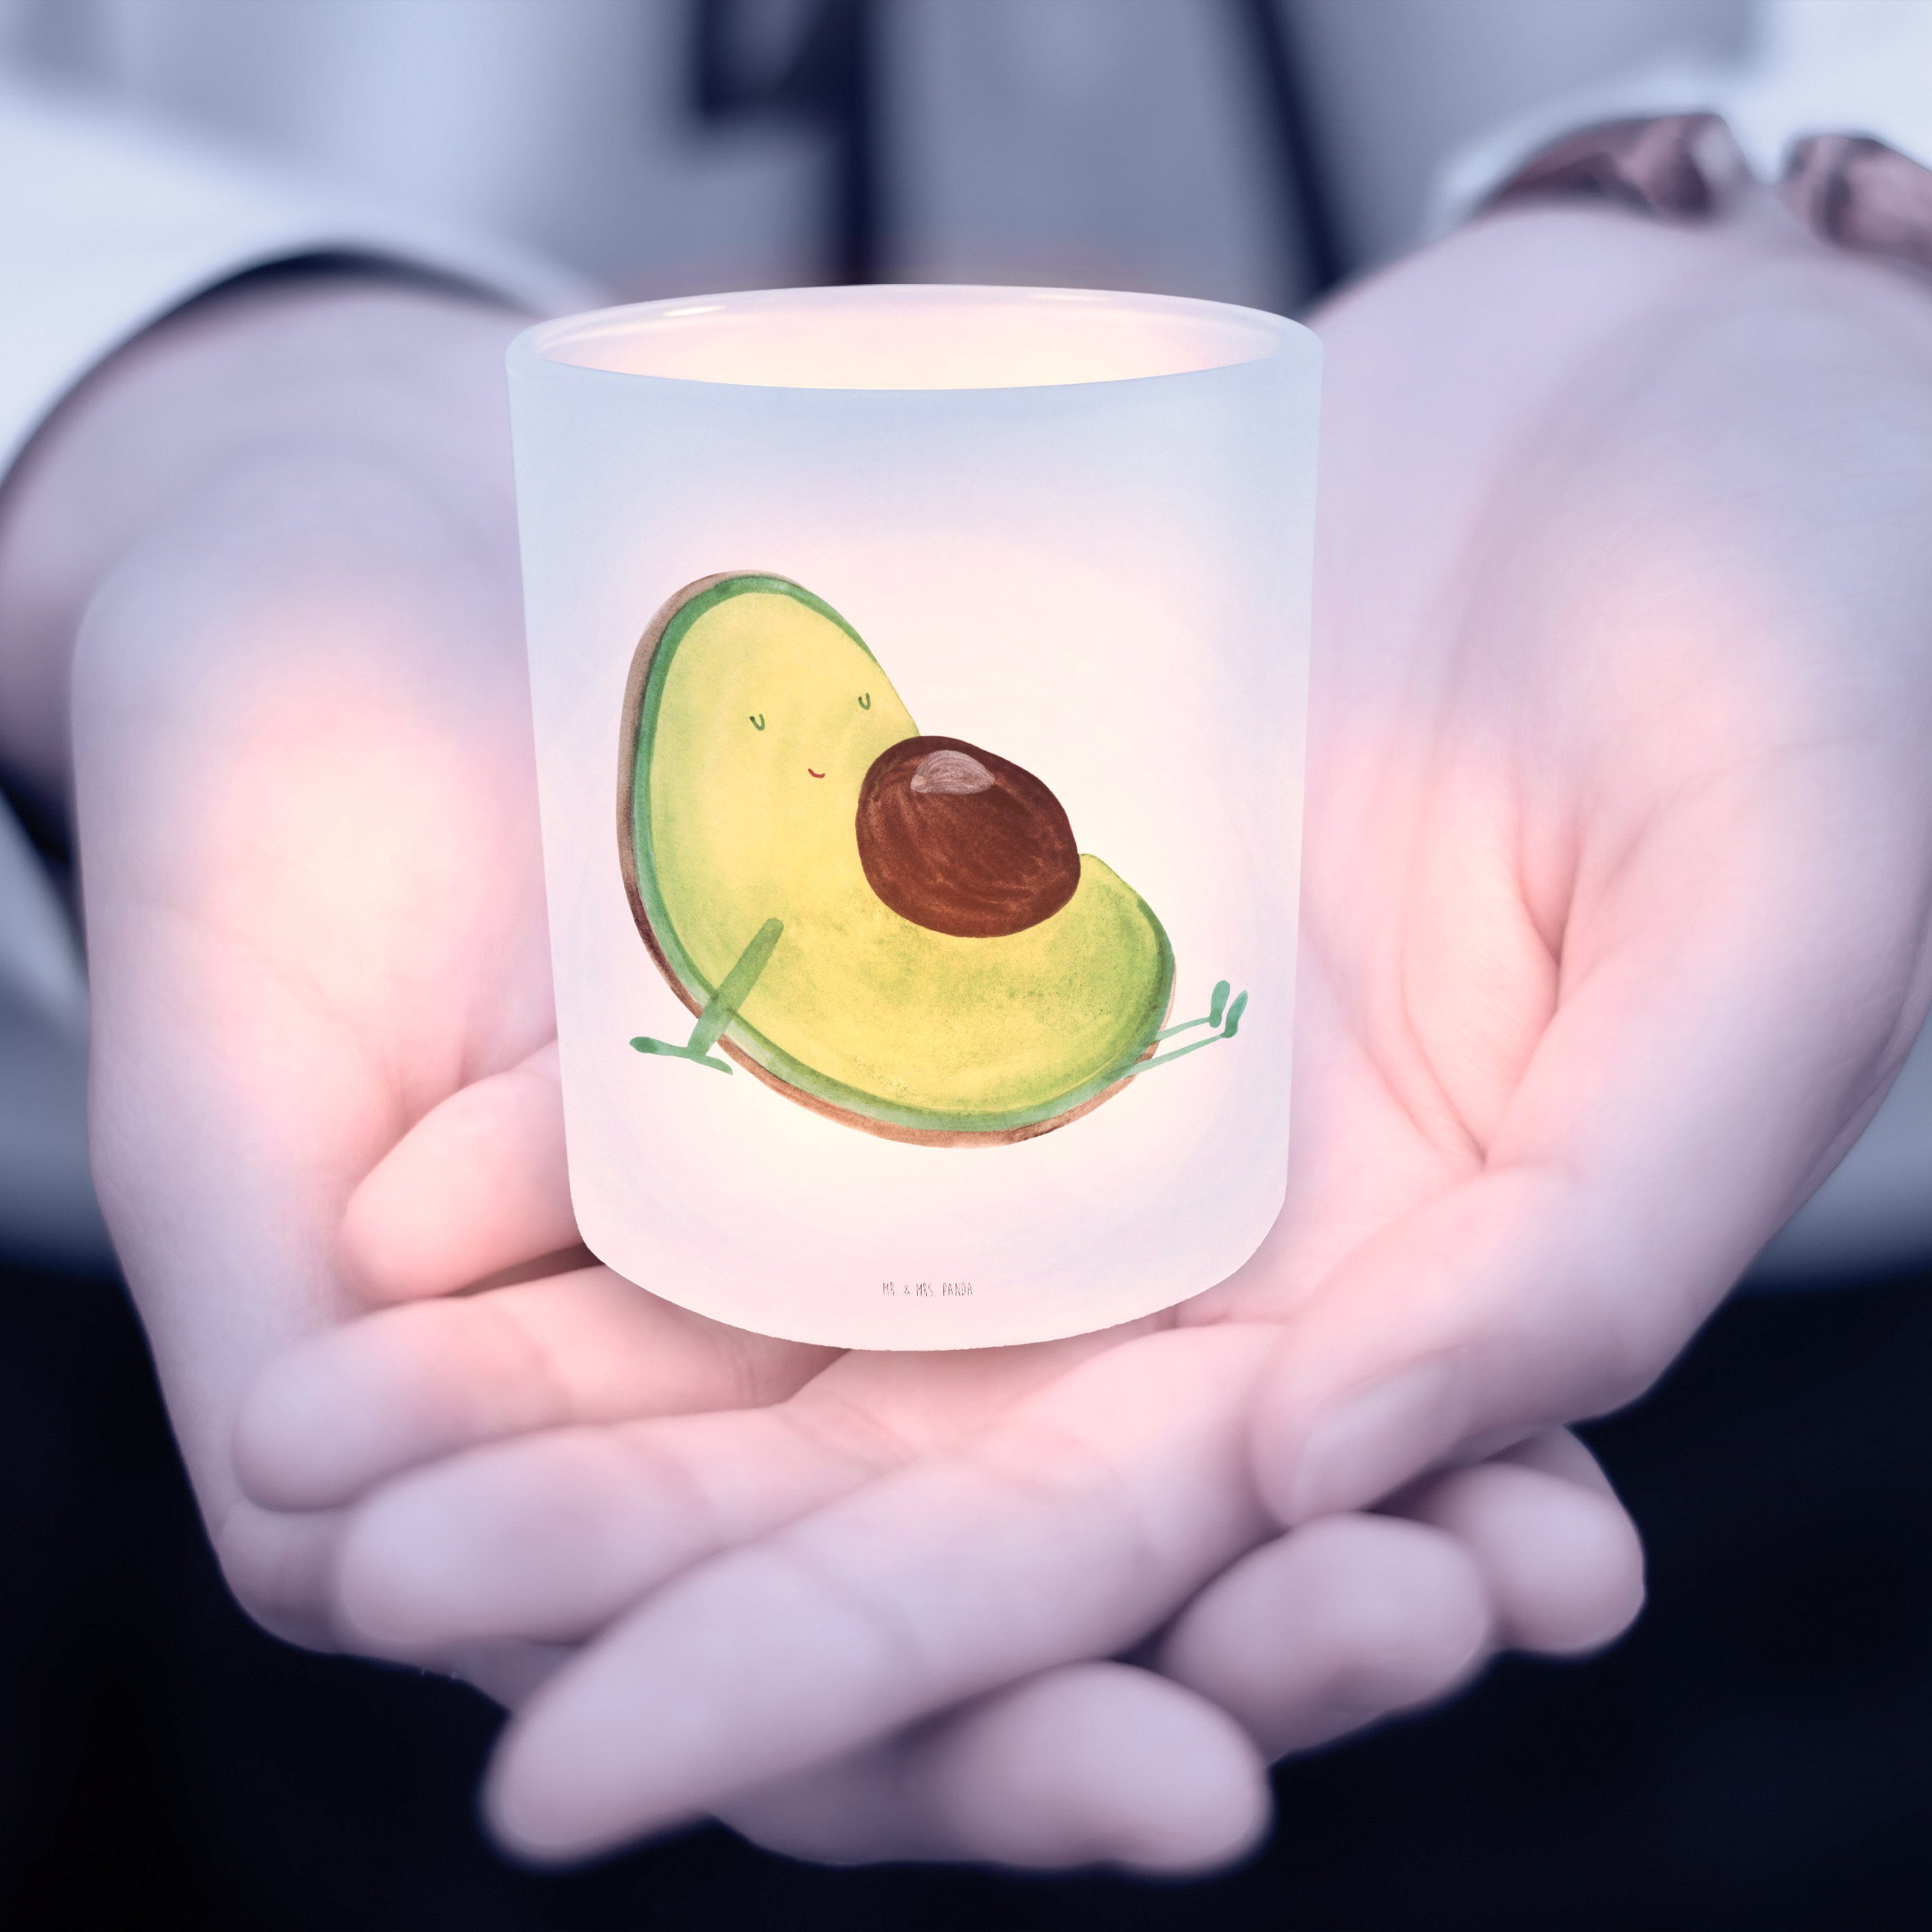 Mr. & Mrs. Panda Windlicht (1 Geschenk, Schwangerscha Transparent - Avocado St) - schwanger Teelichter